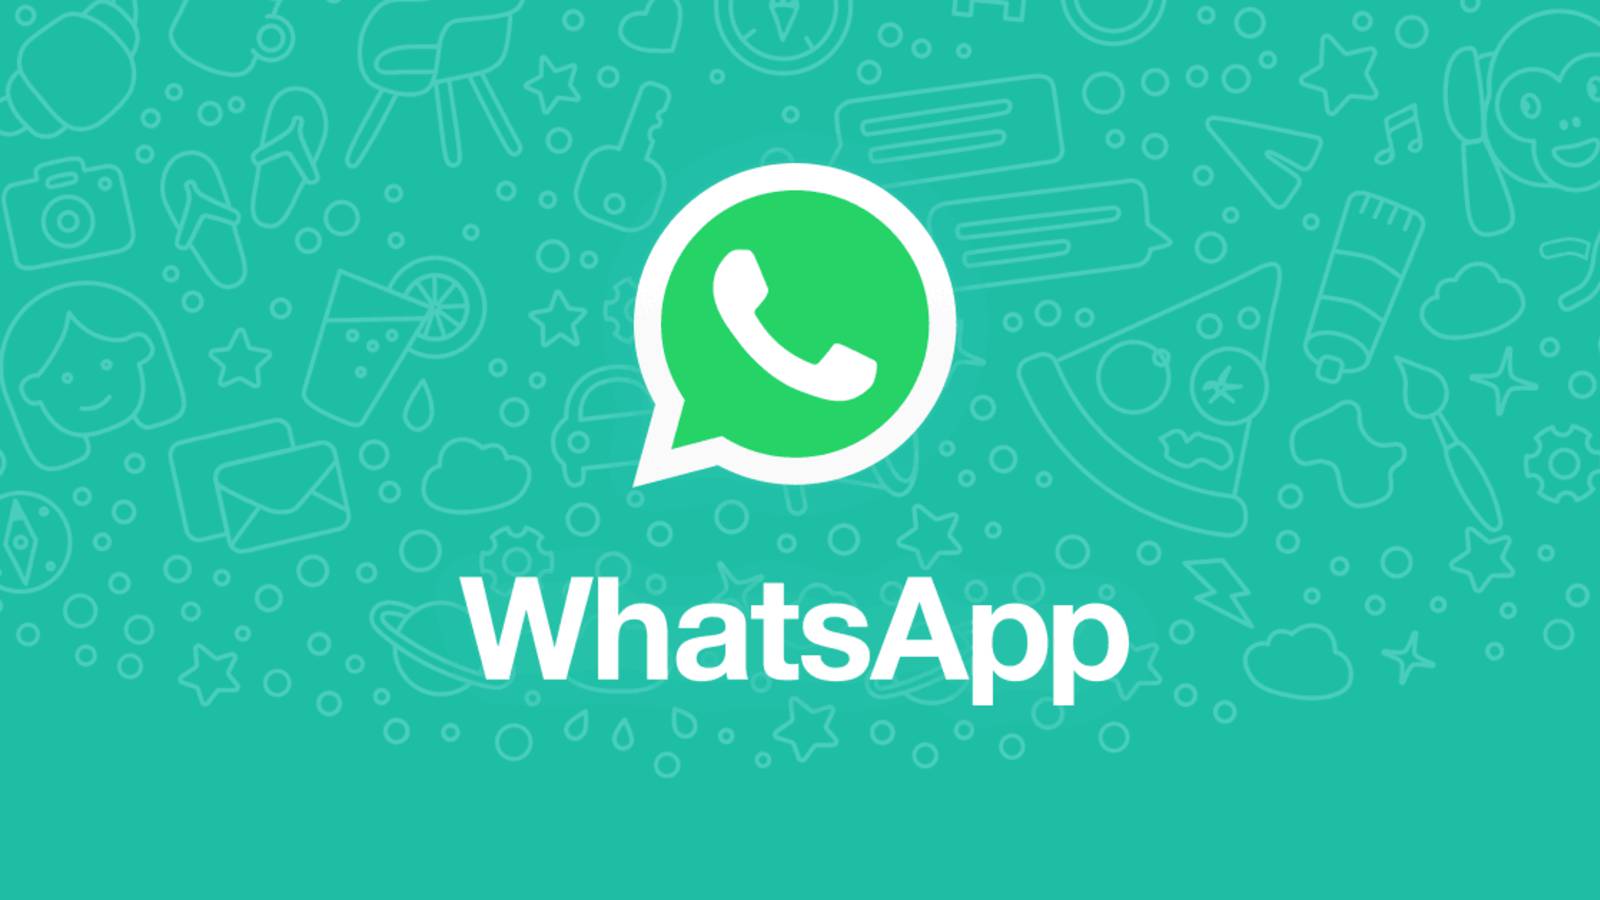 WhatsApp prevention